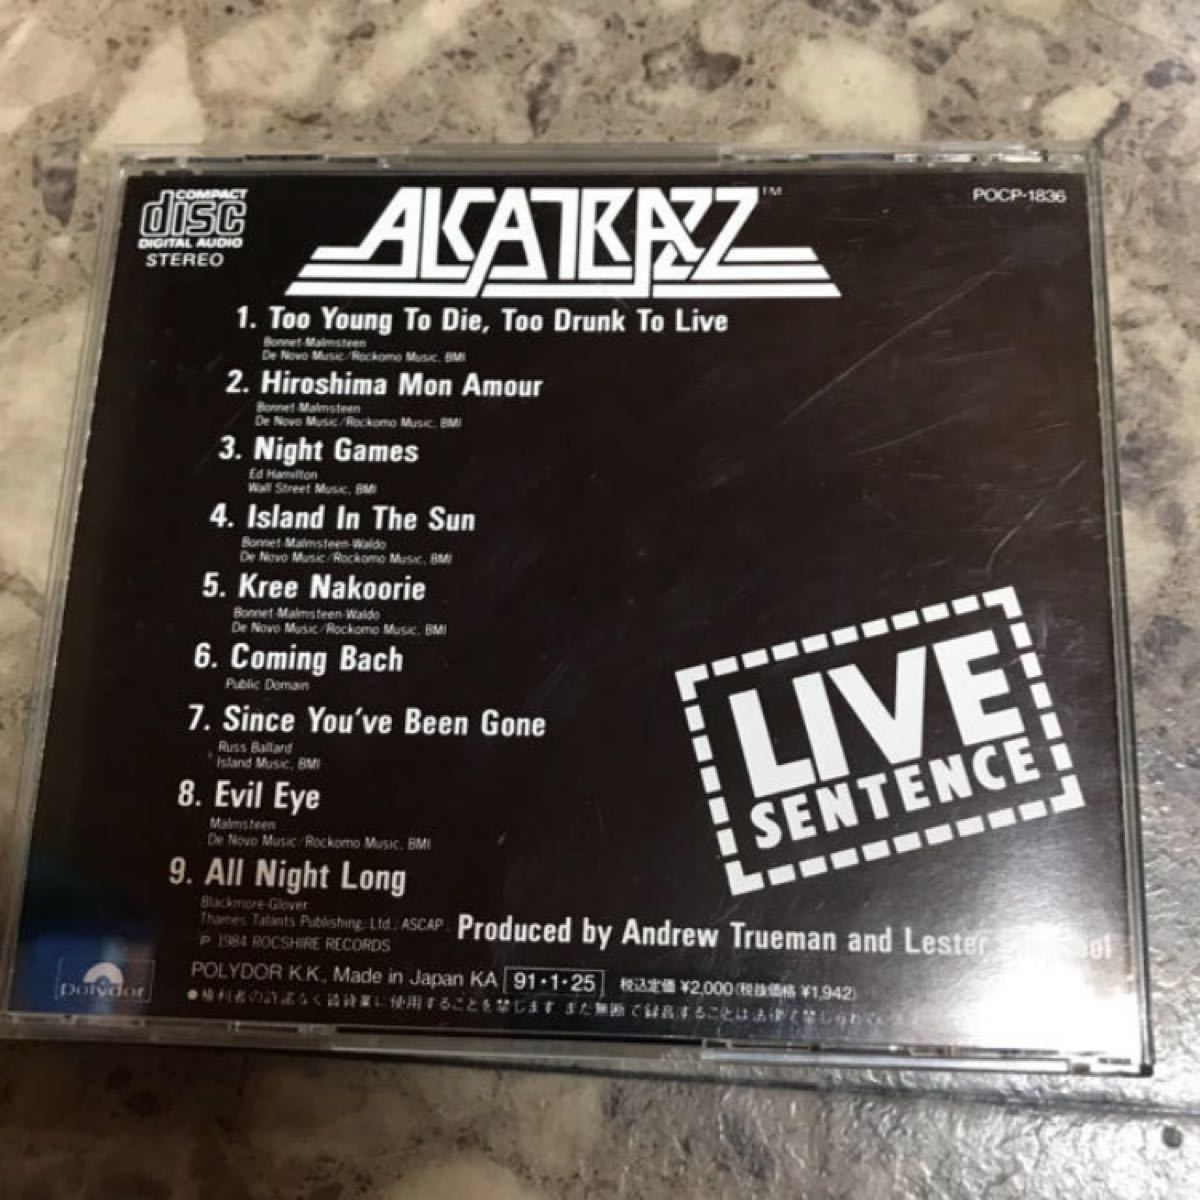 ALCATRAZZ / Live Sentence  '84年 イングヴェイ